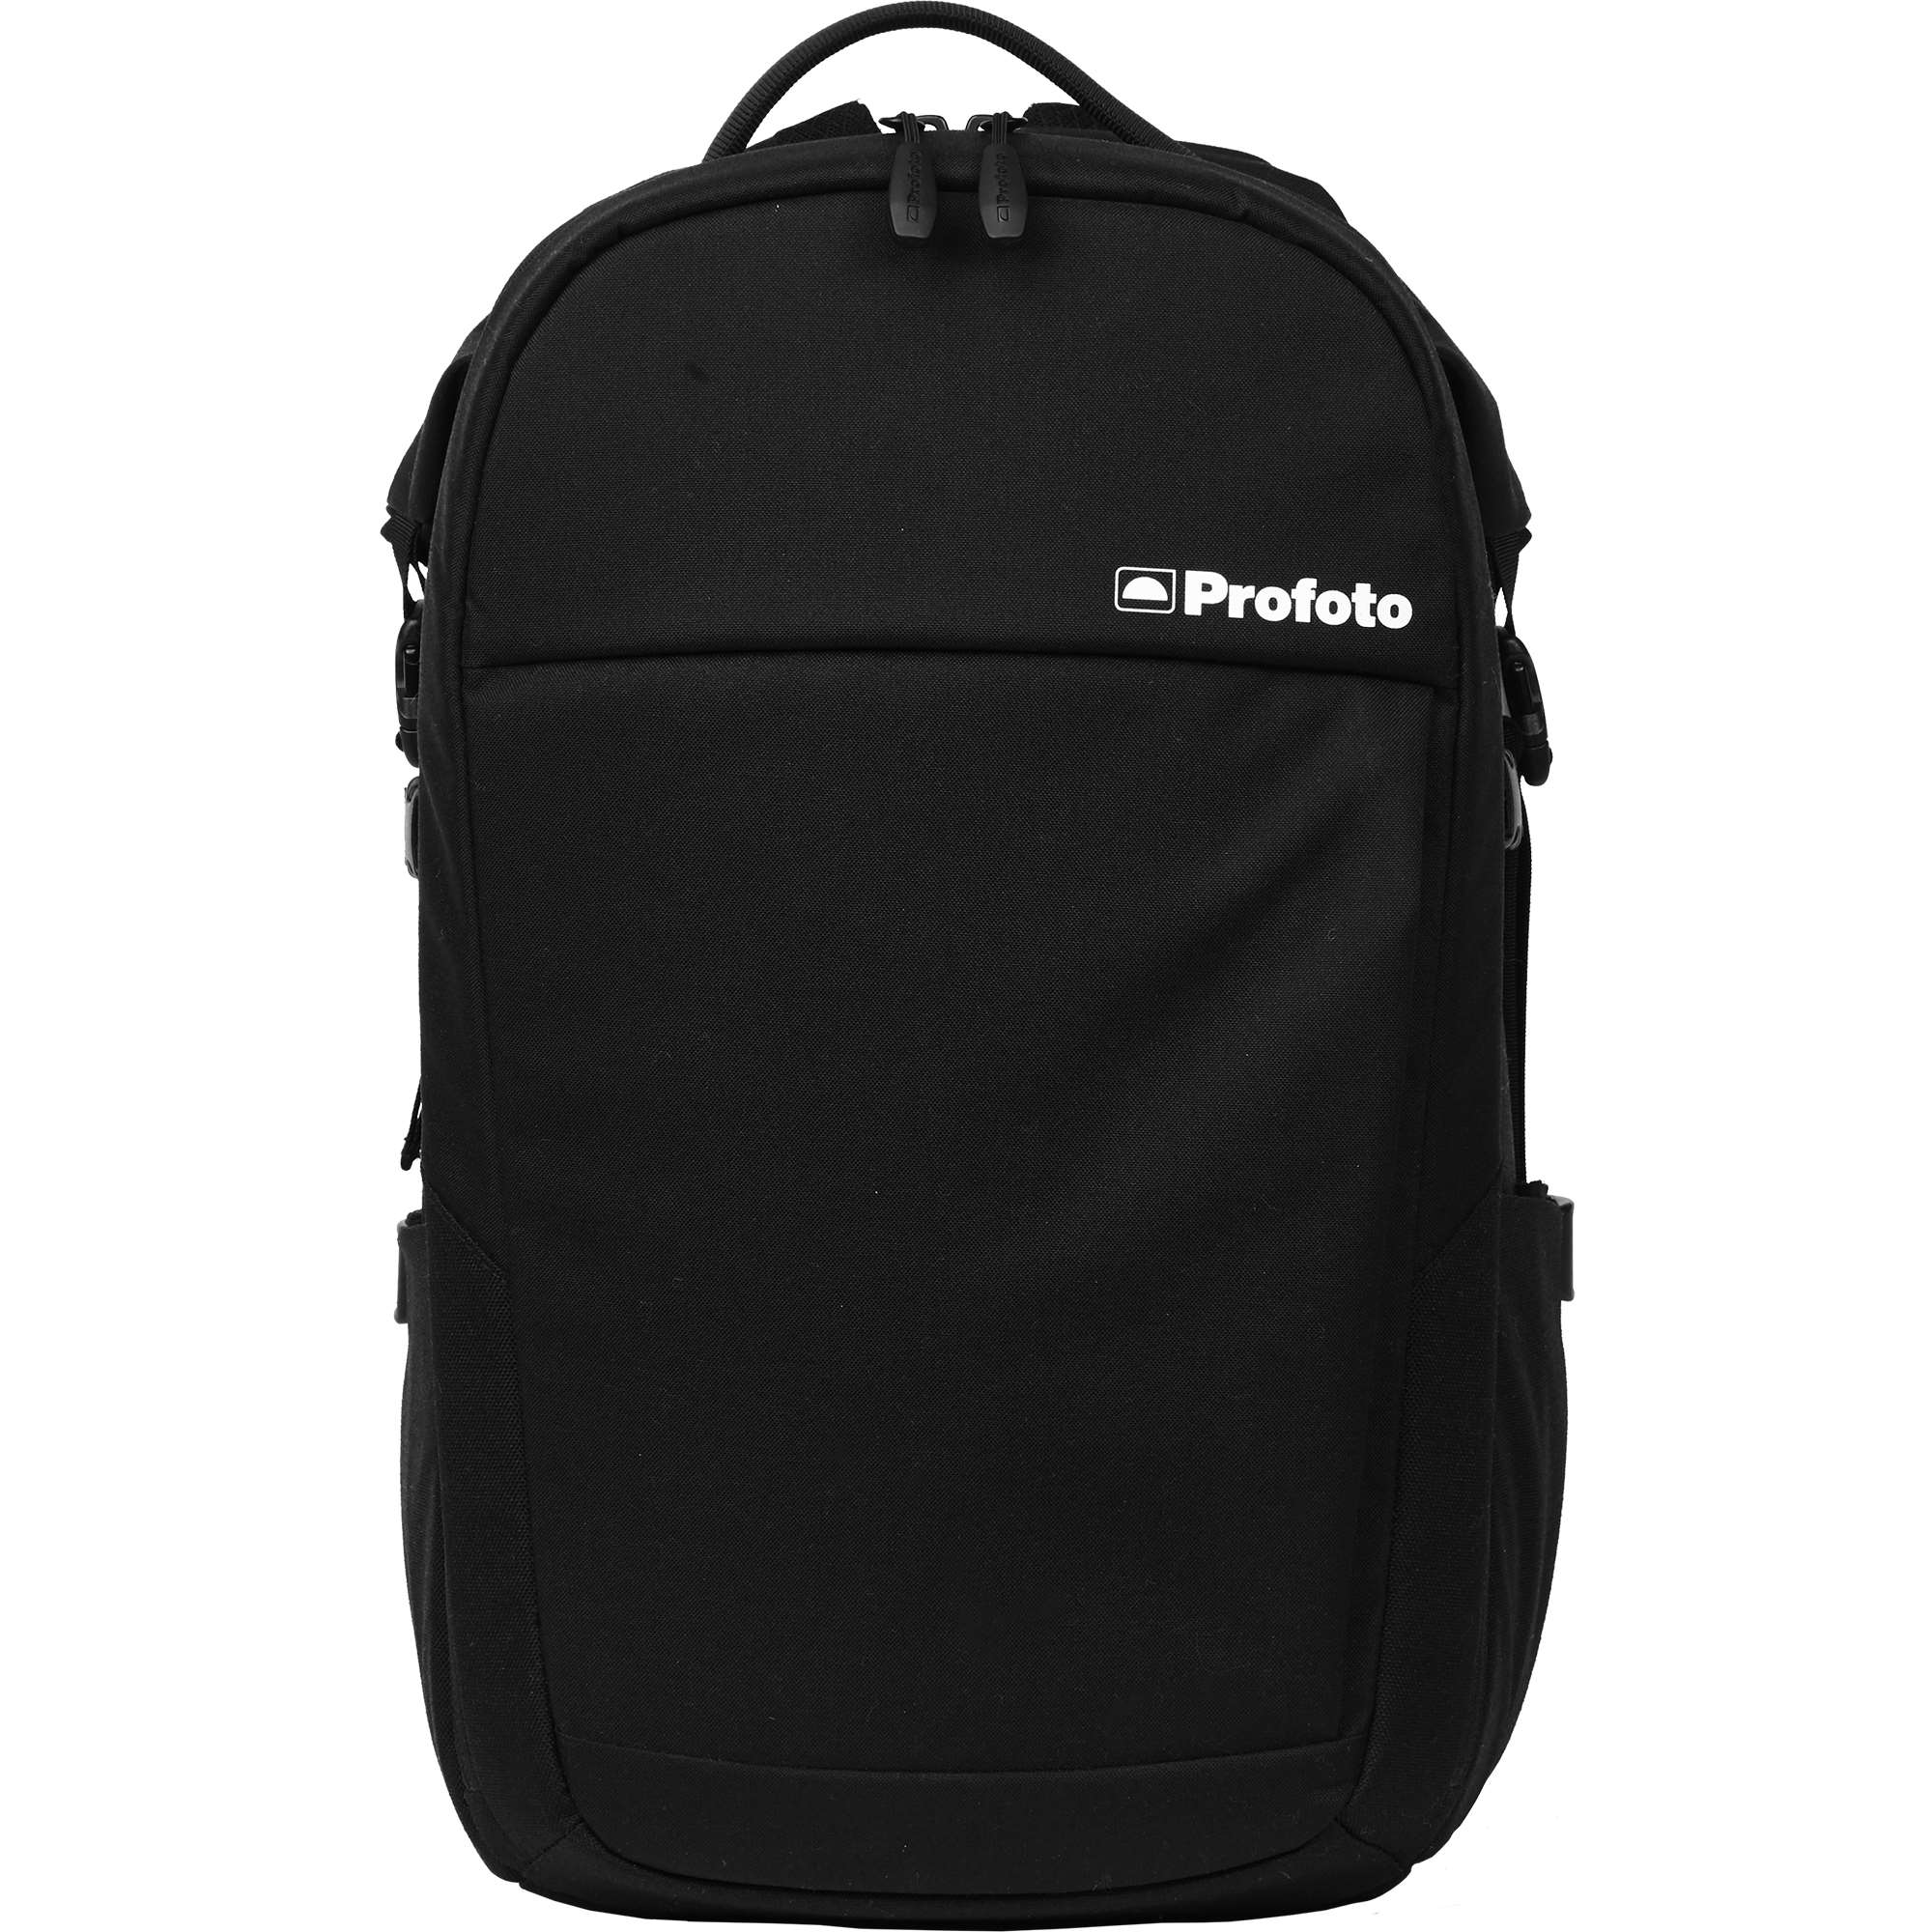 Profoto Core Backpack S 0